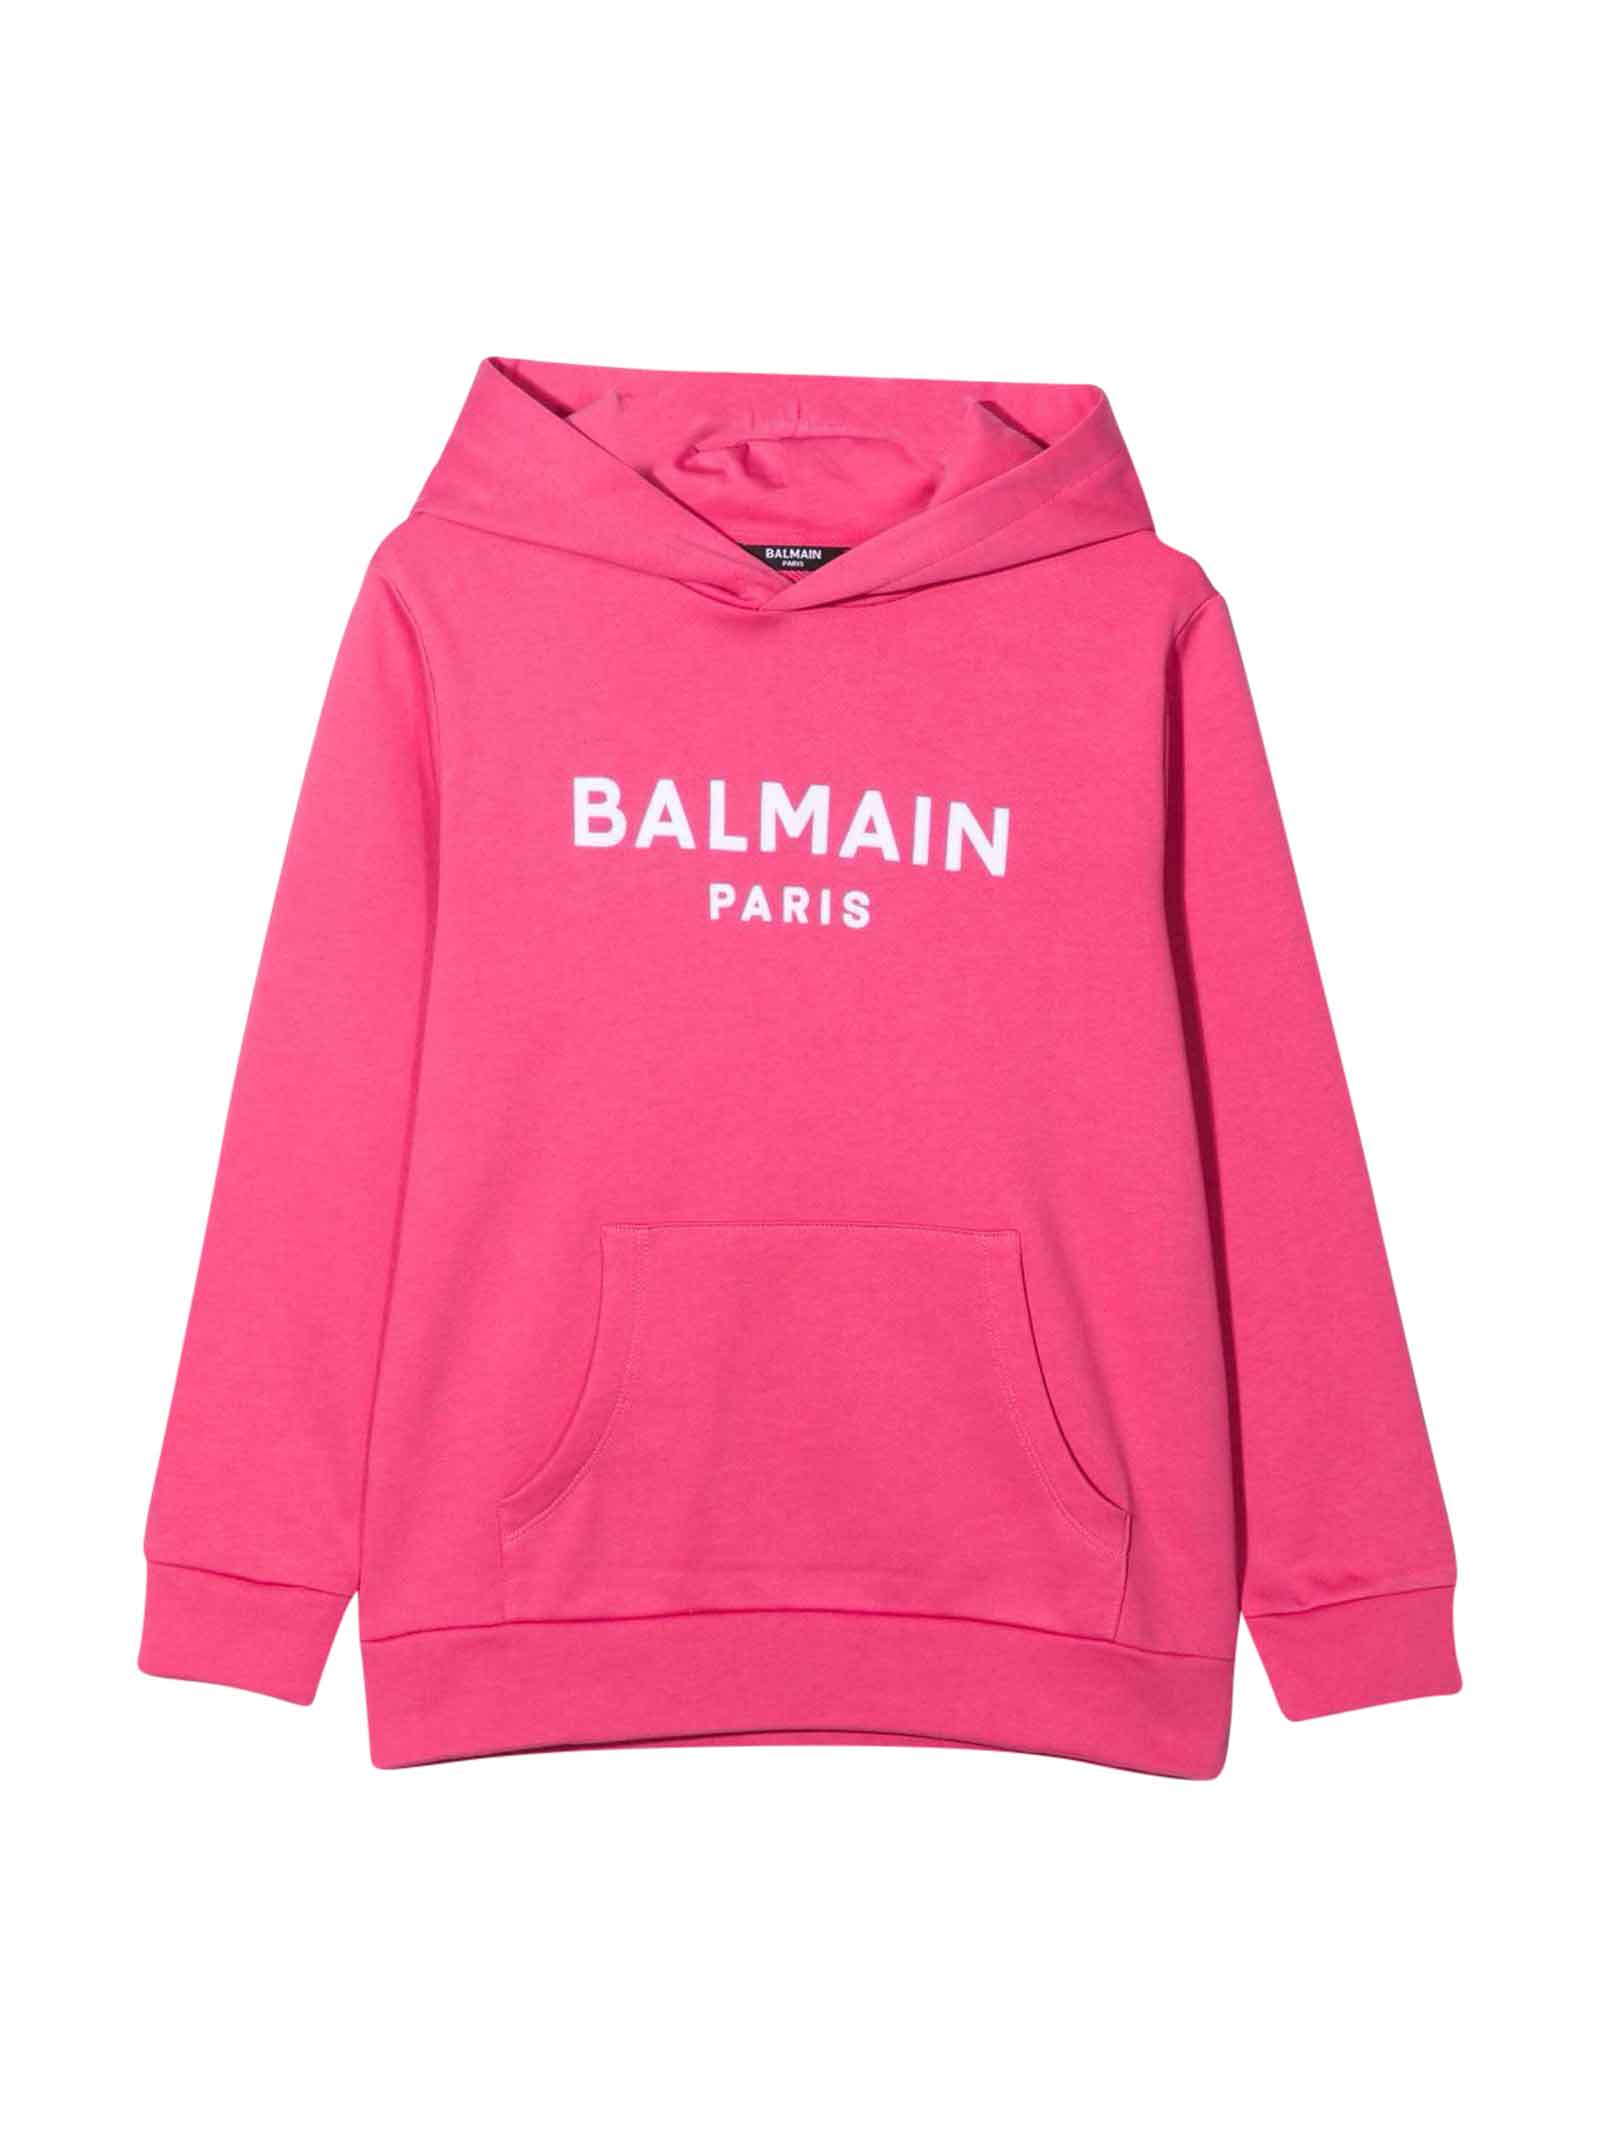 Balmain Unisex Pink Sweatshirt